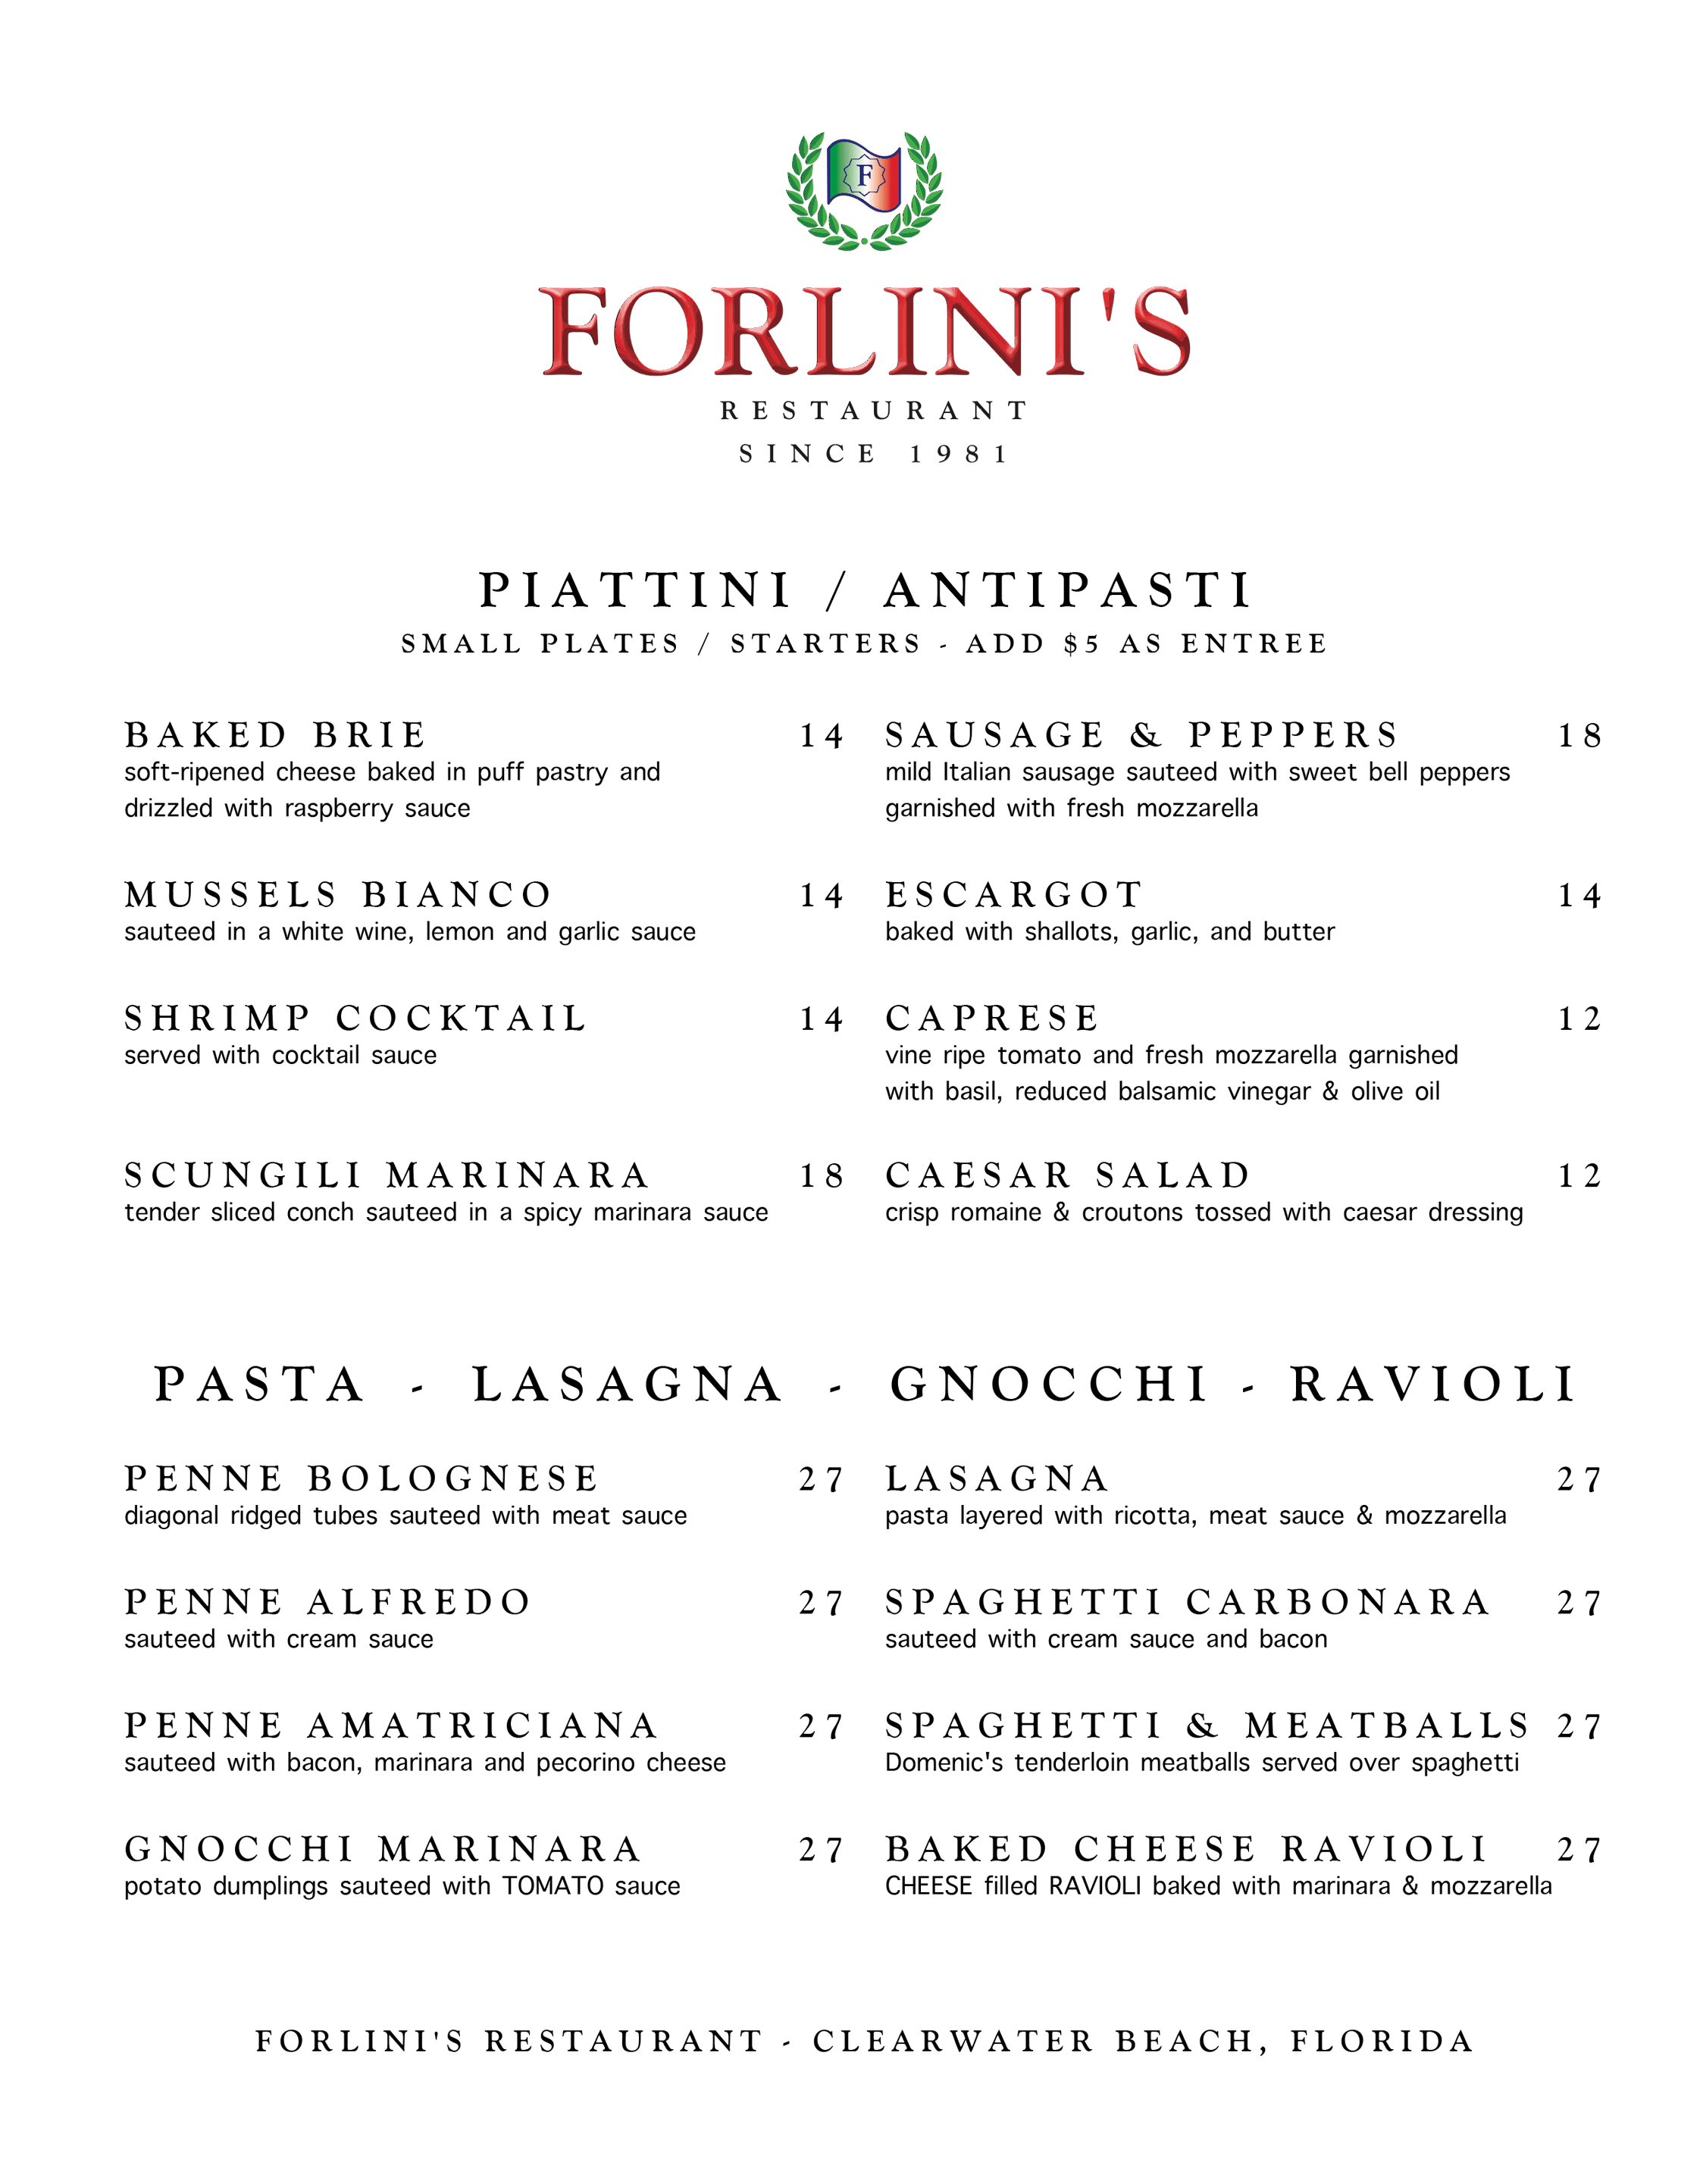 Forlini's Restaurant - Italian Restaurant in Clearwater Beach, FL